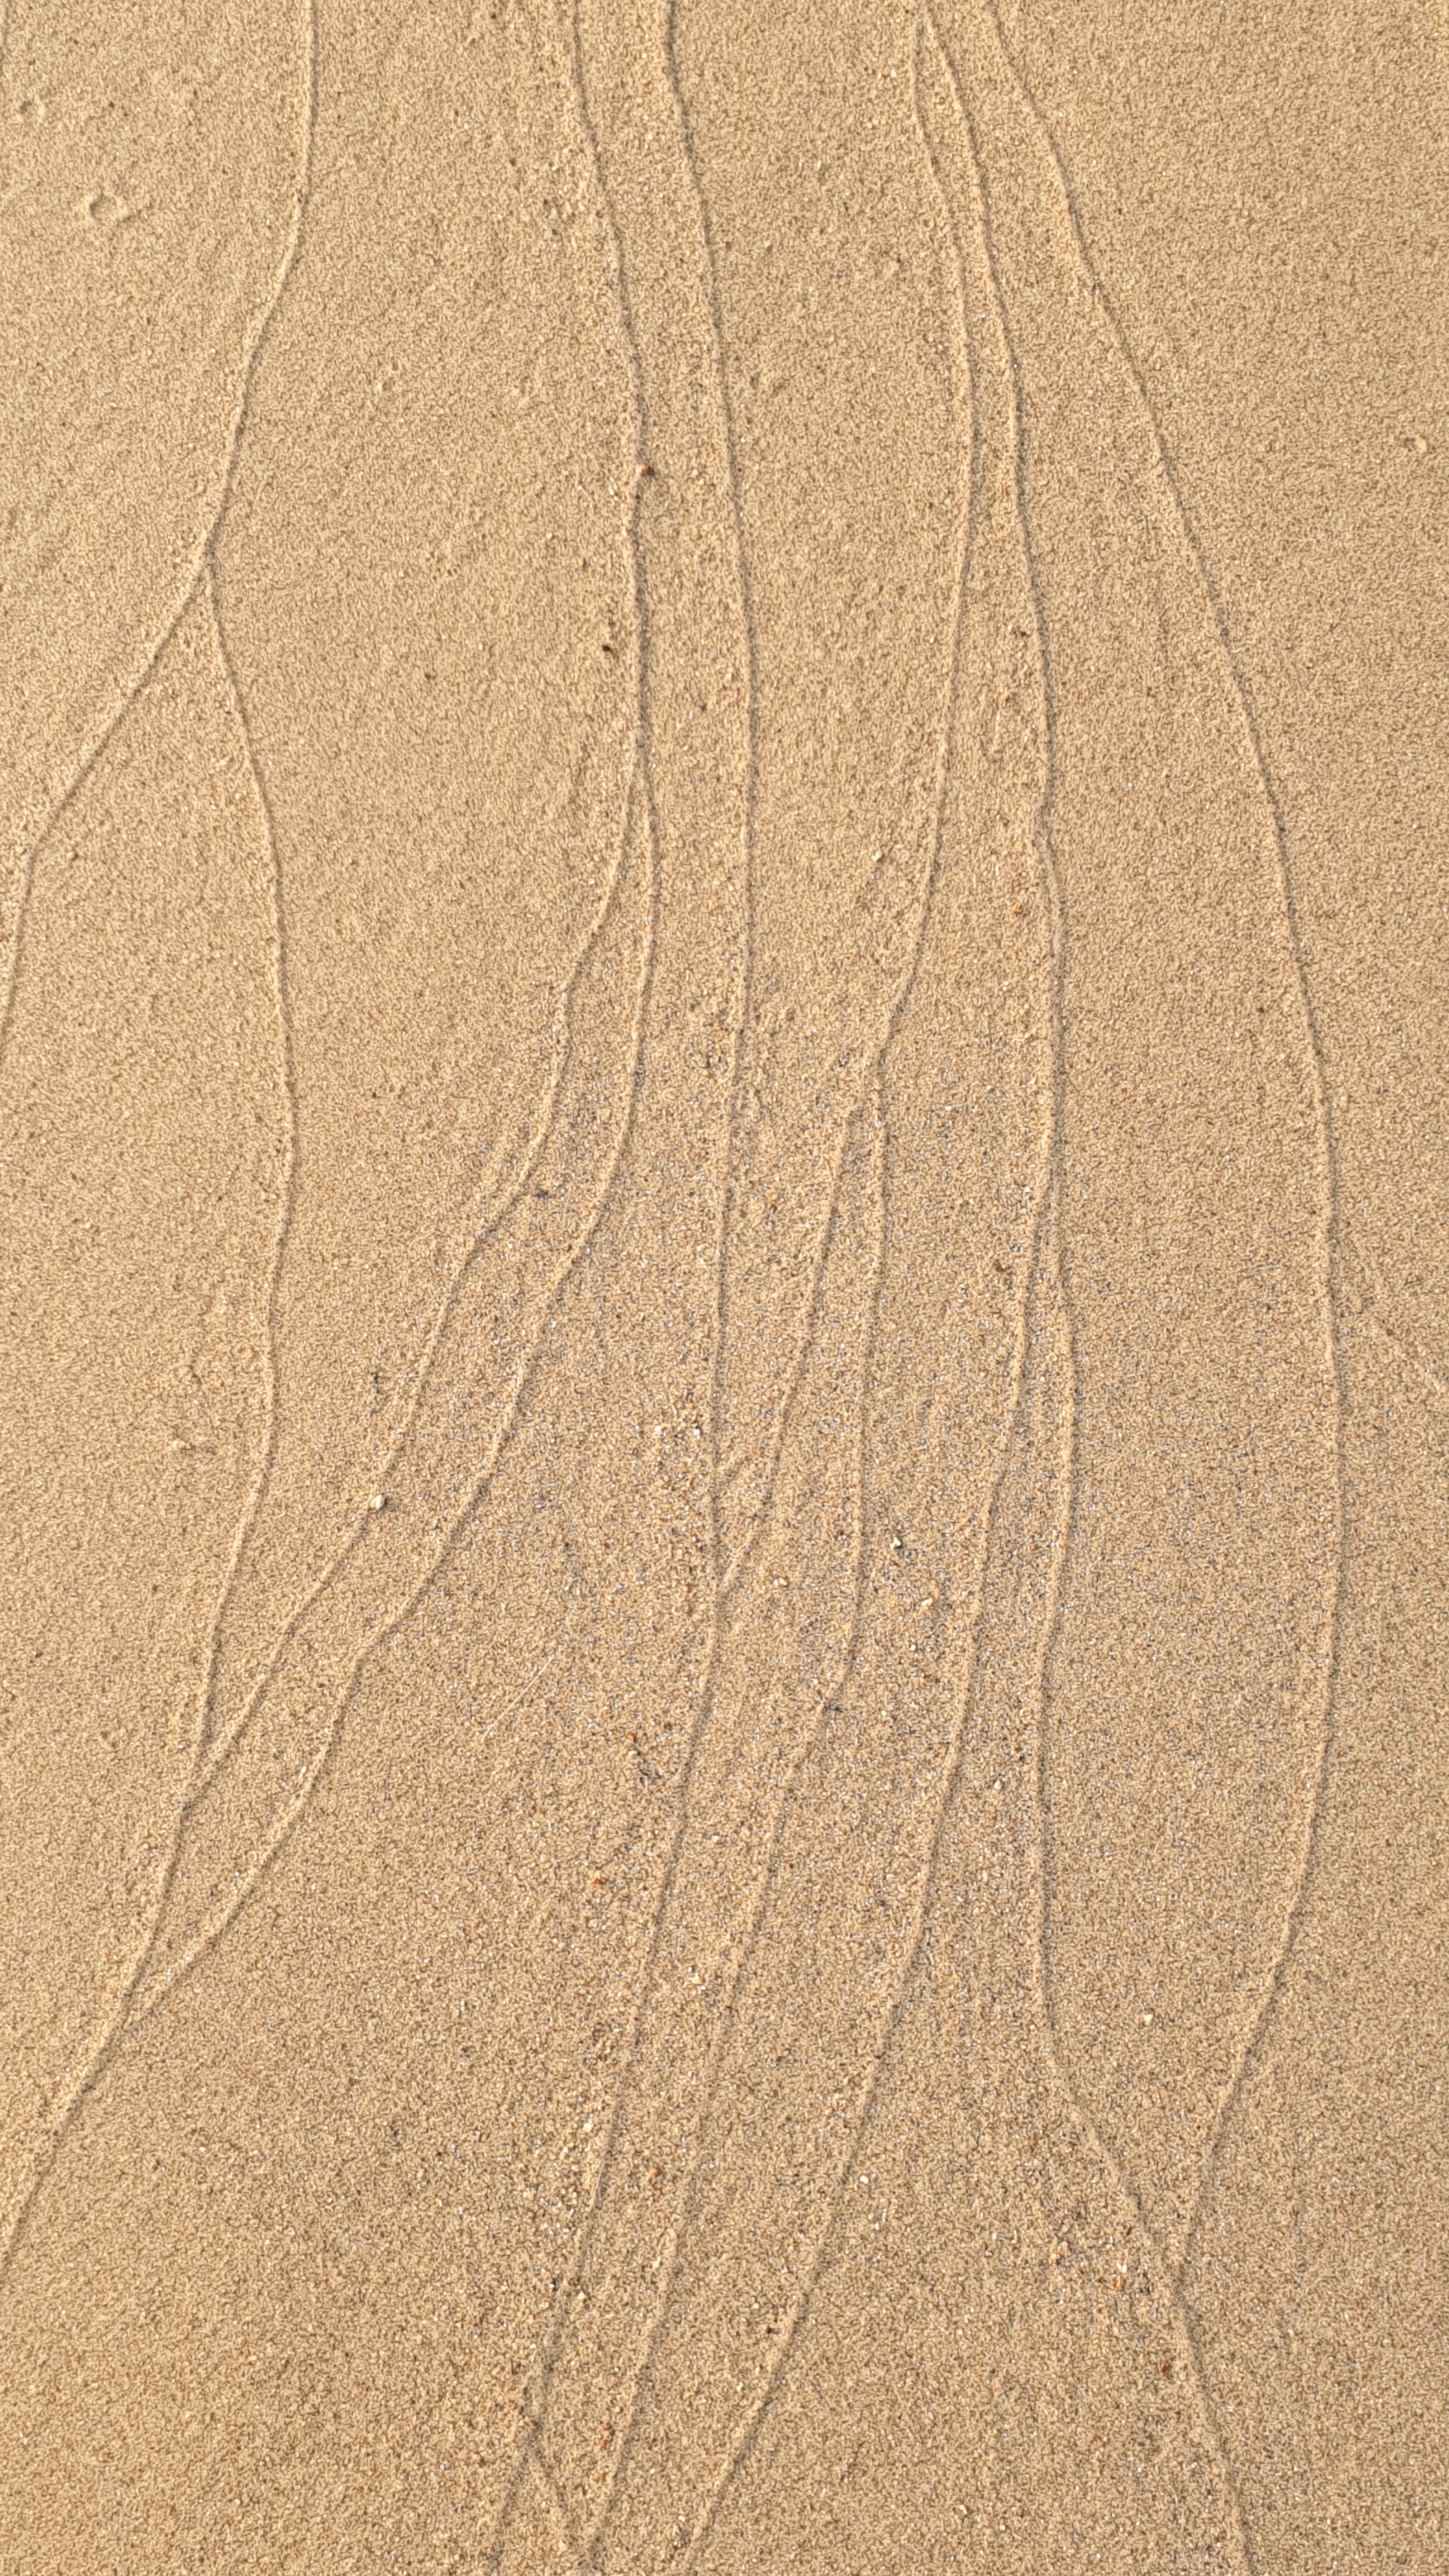 traces, sandy, sand, texture, lines, textures